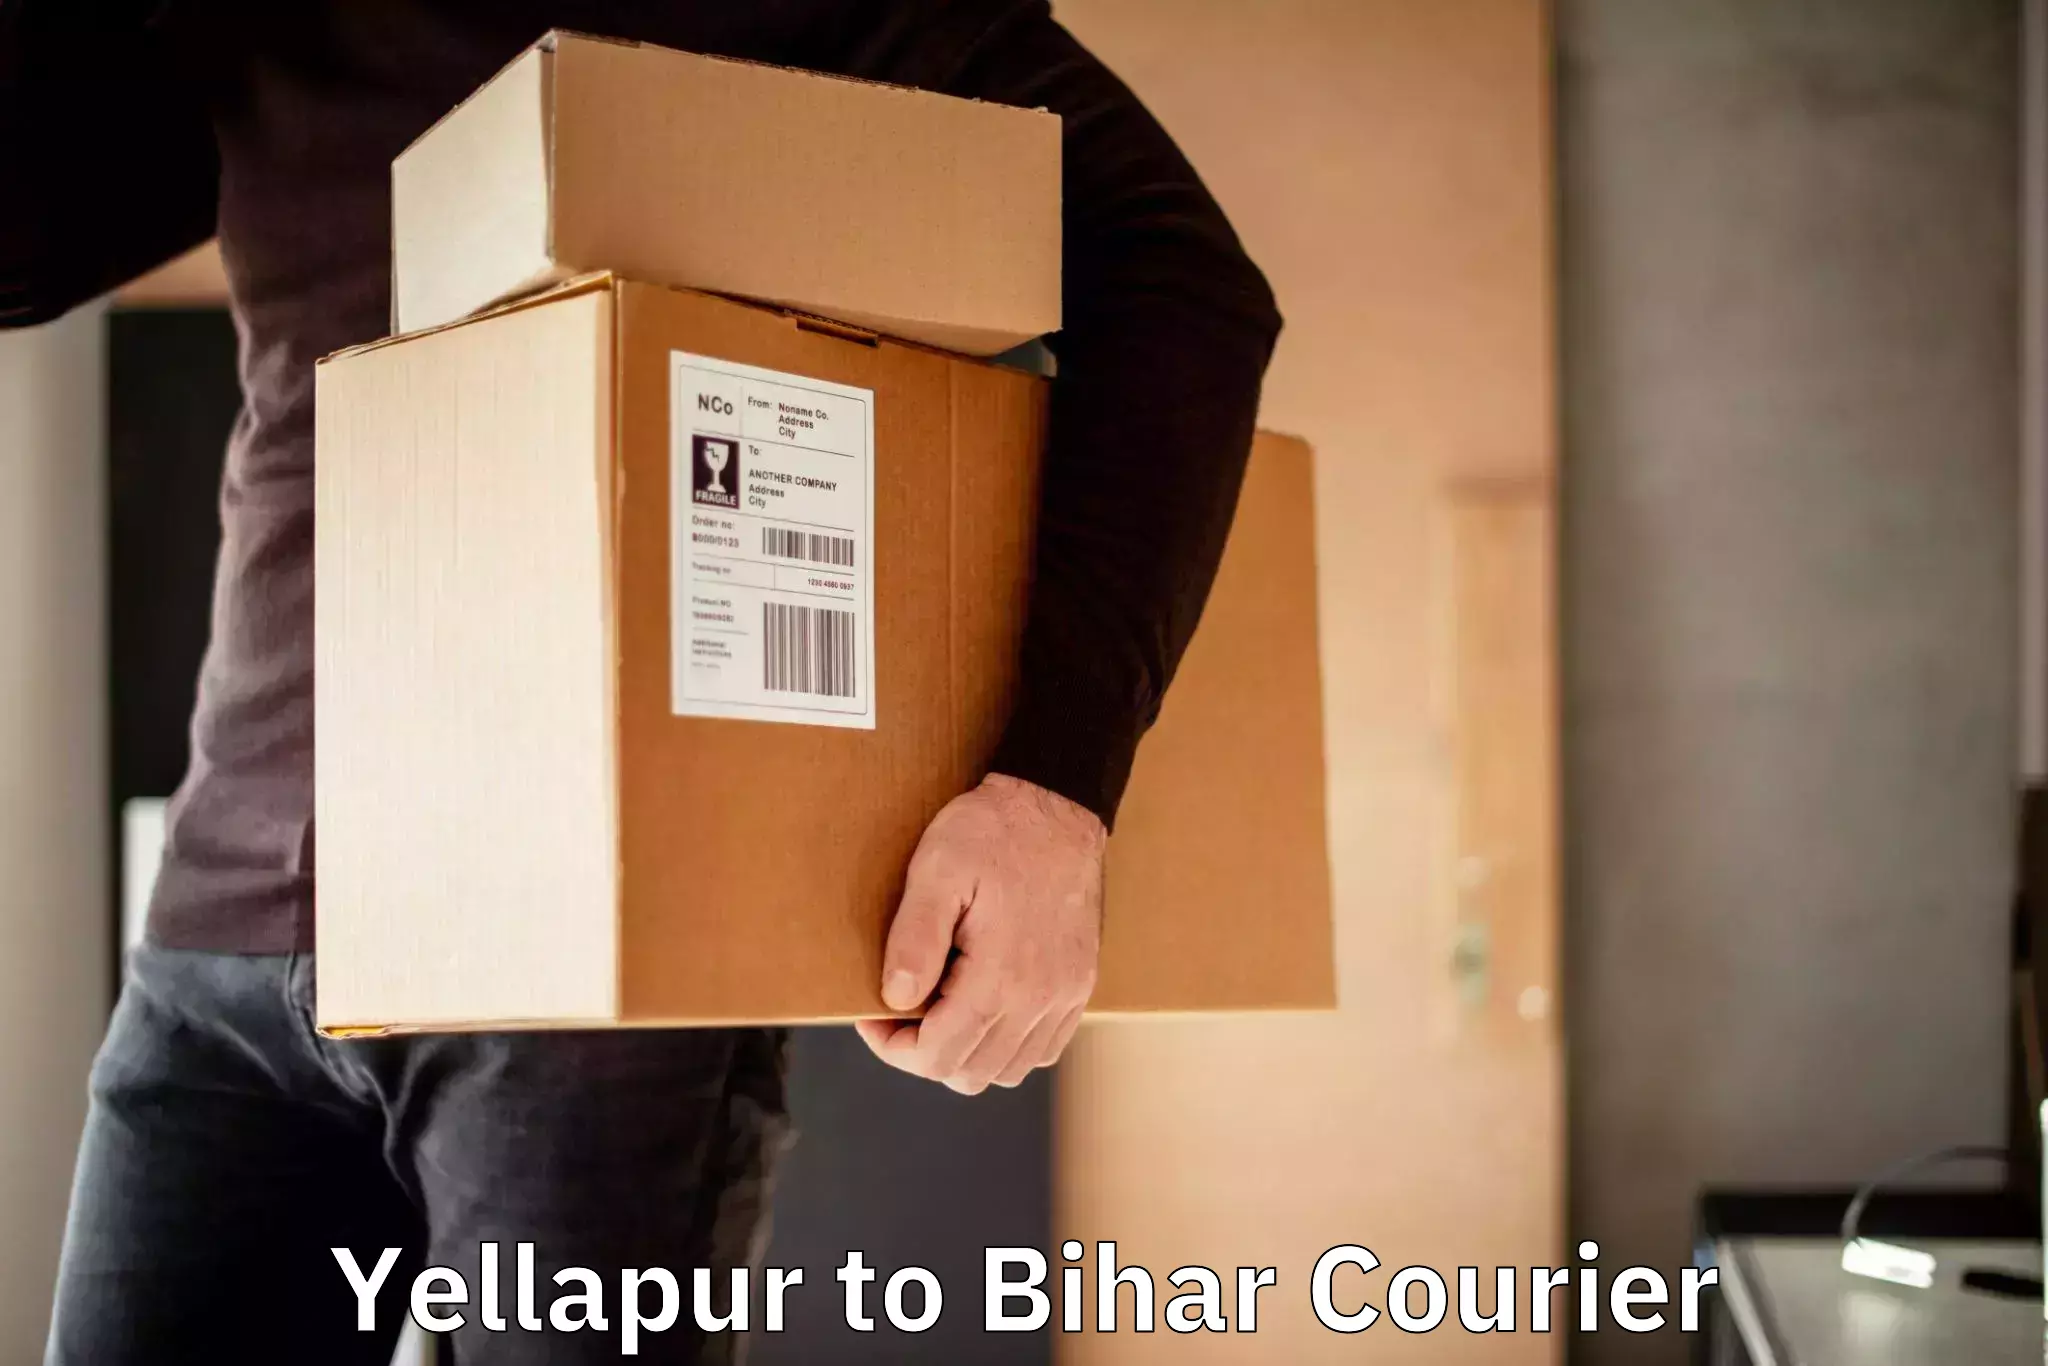 High-performance logistics Yellapur to Baniapur